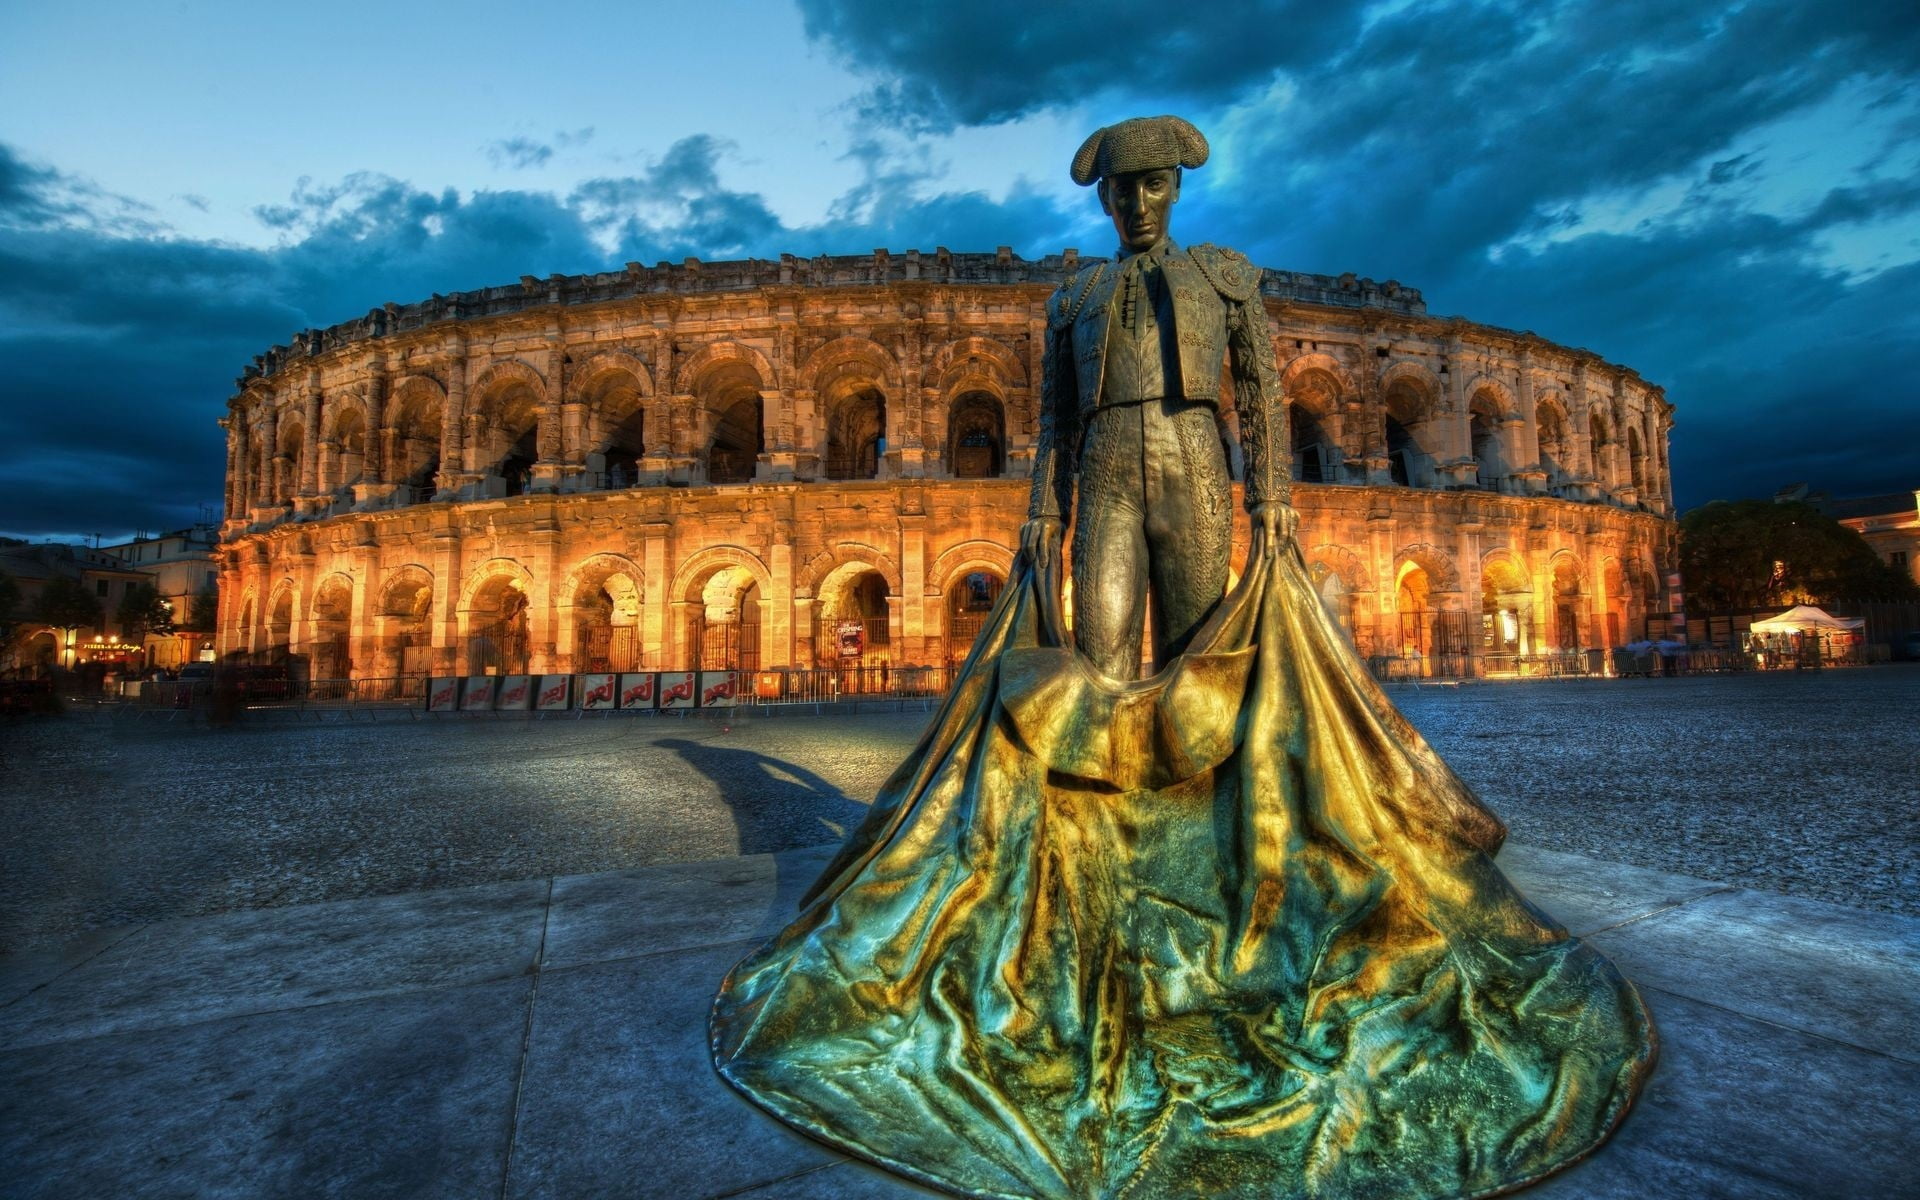 The Colosseum, coliseum, monuments, landmarks, rome, italy, architecture